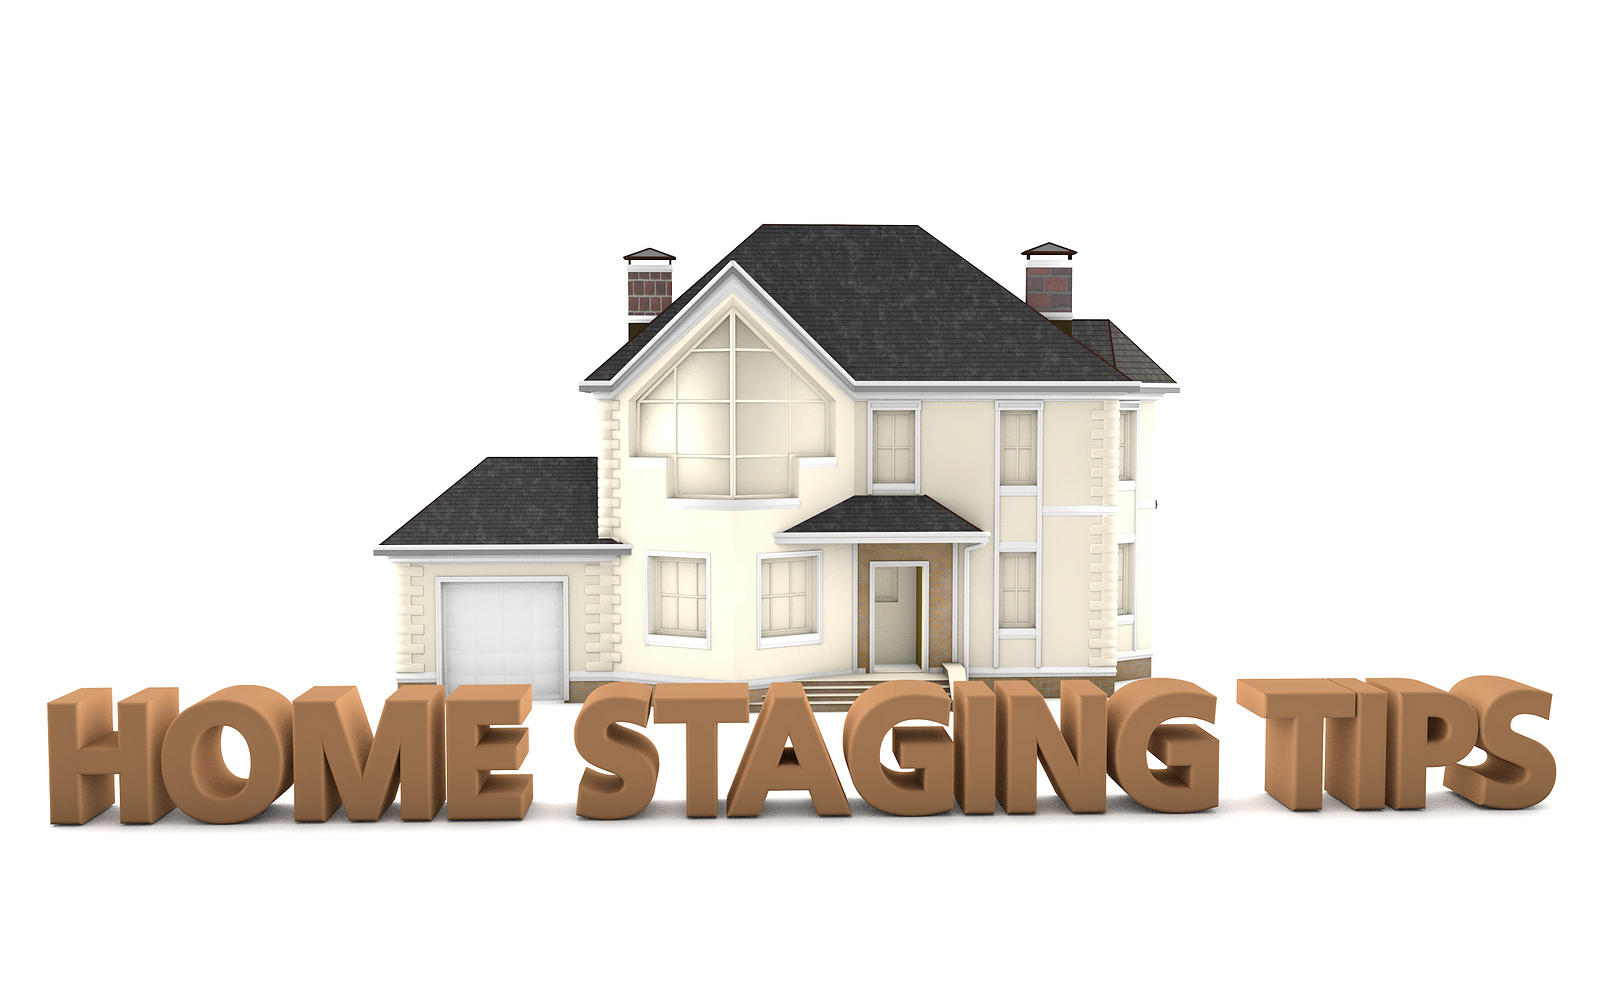 bigstock-home-staging-tips-107868275.jpg